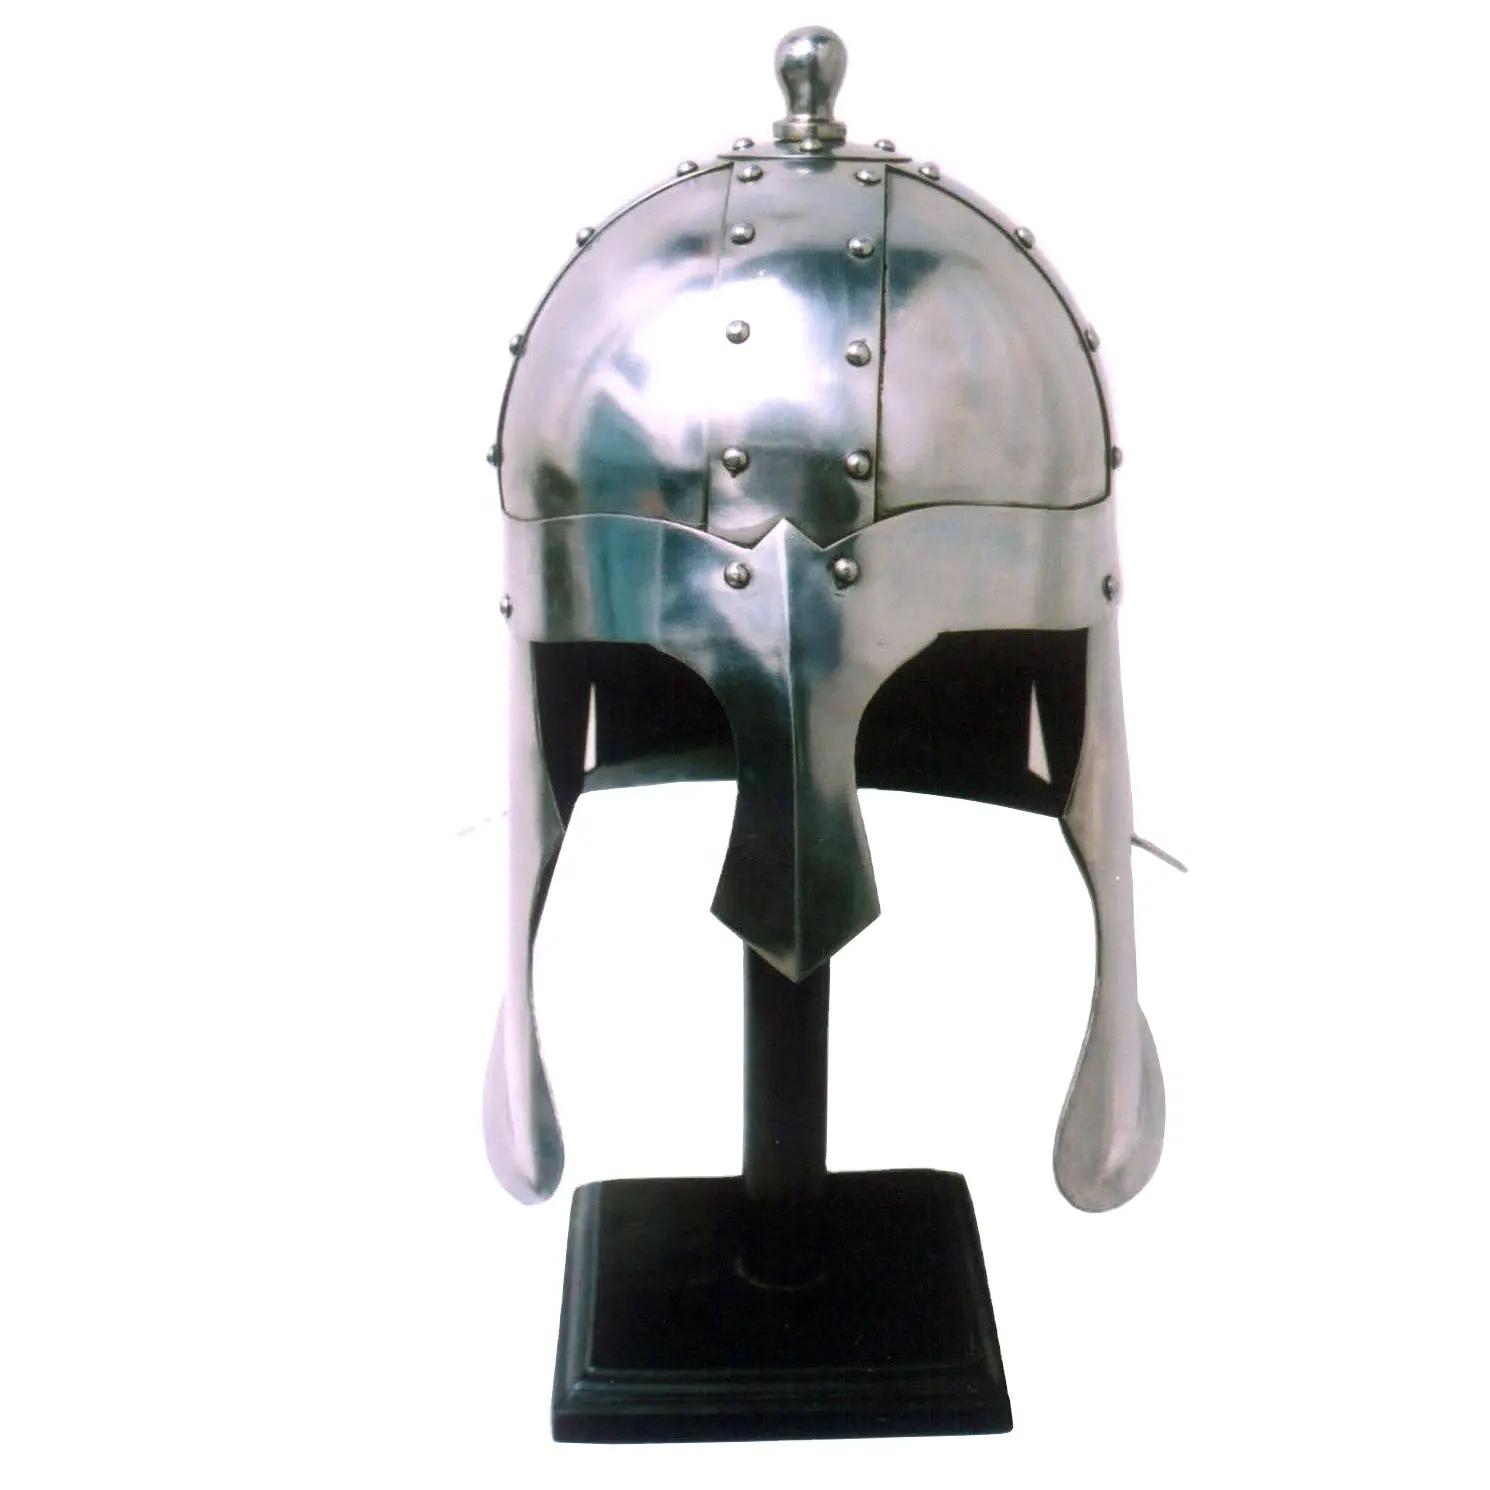 Premium Quality Arthurian armor helmet with polish medieval armor helmet for Home Decoration Knight armor helmet